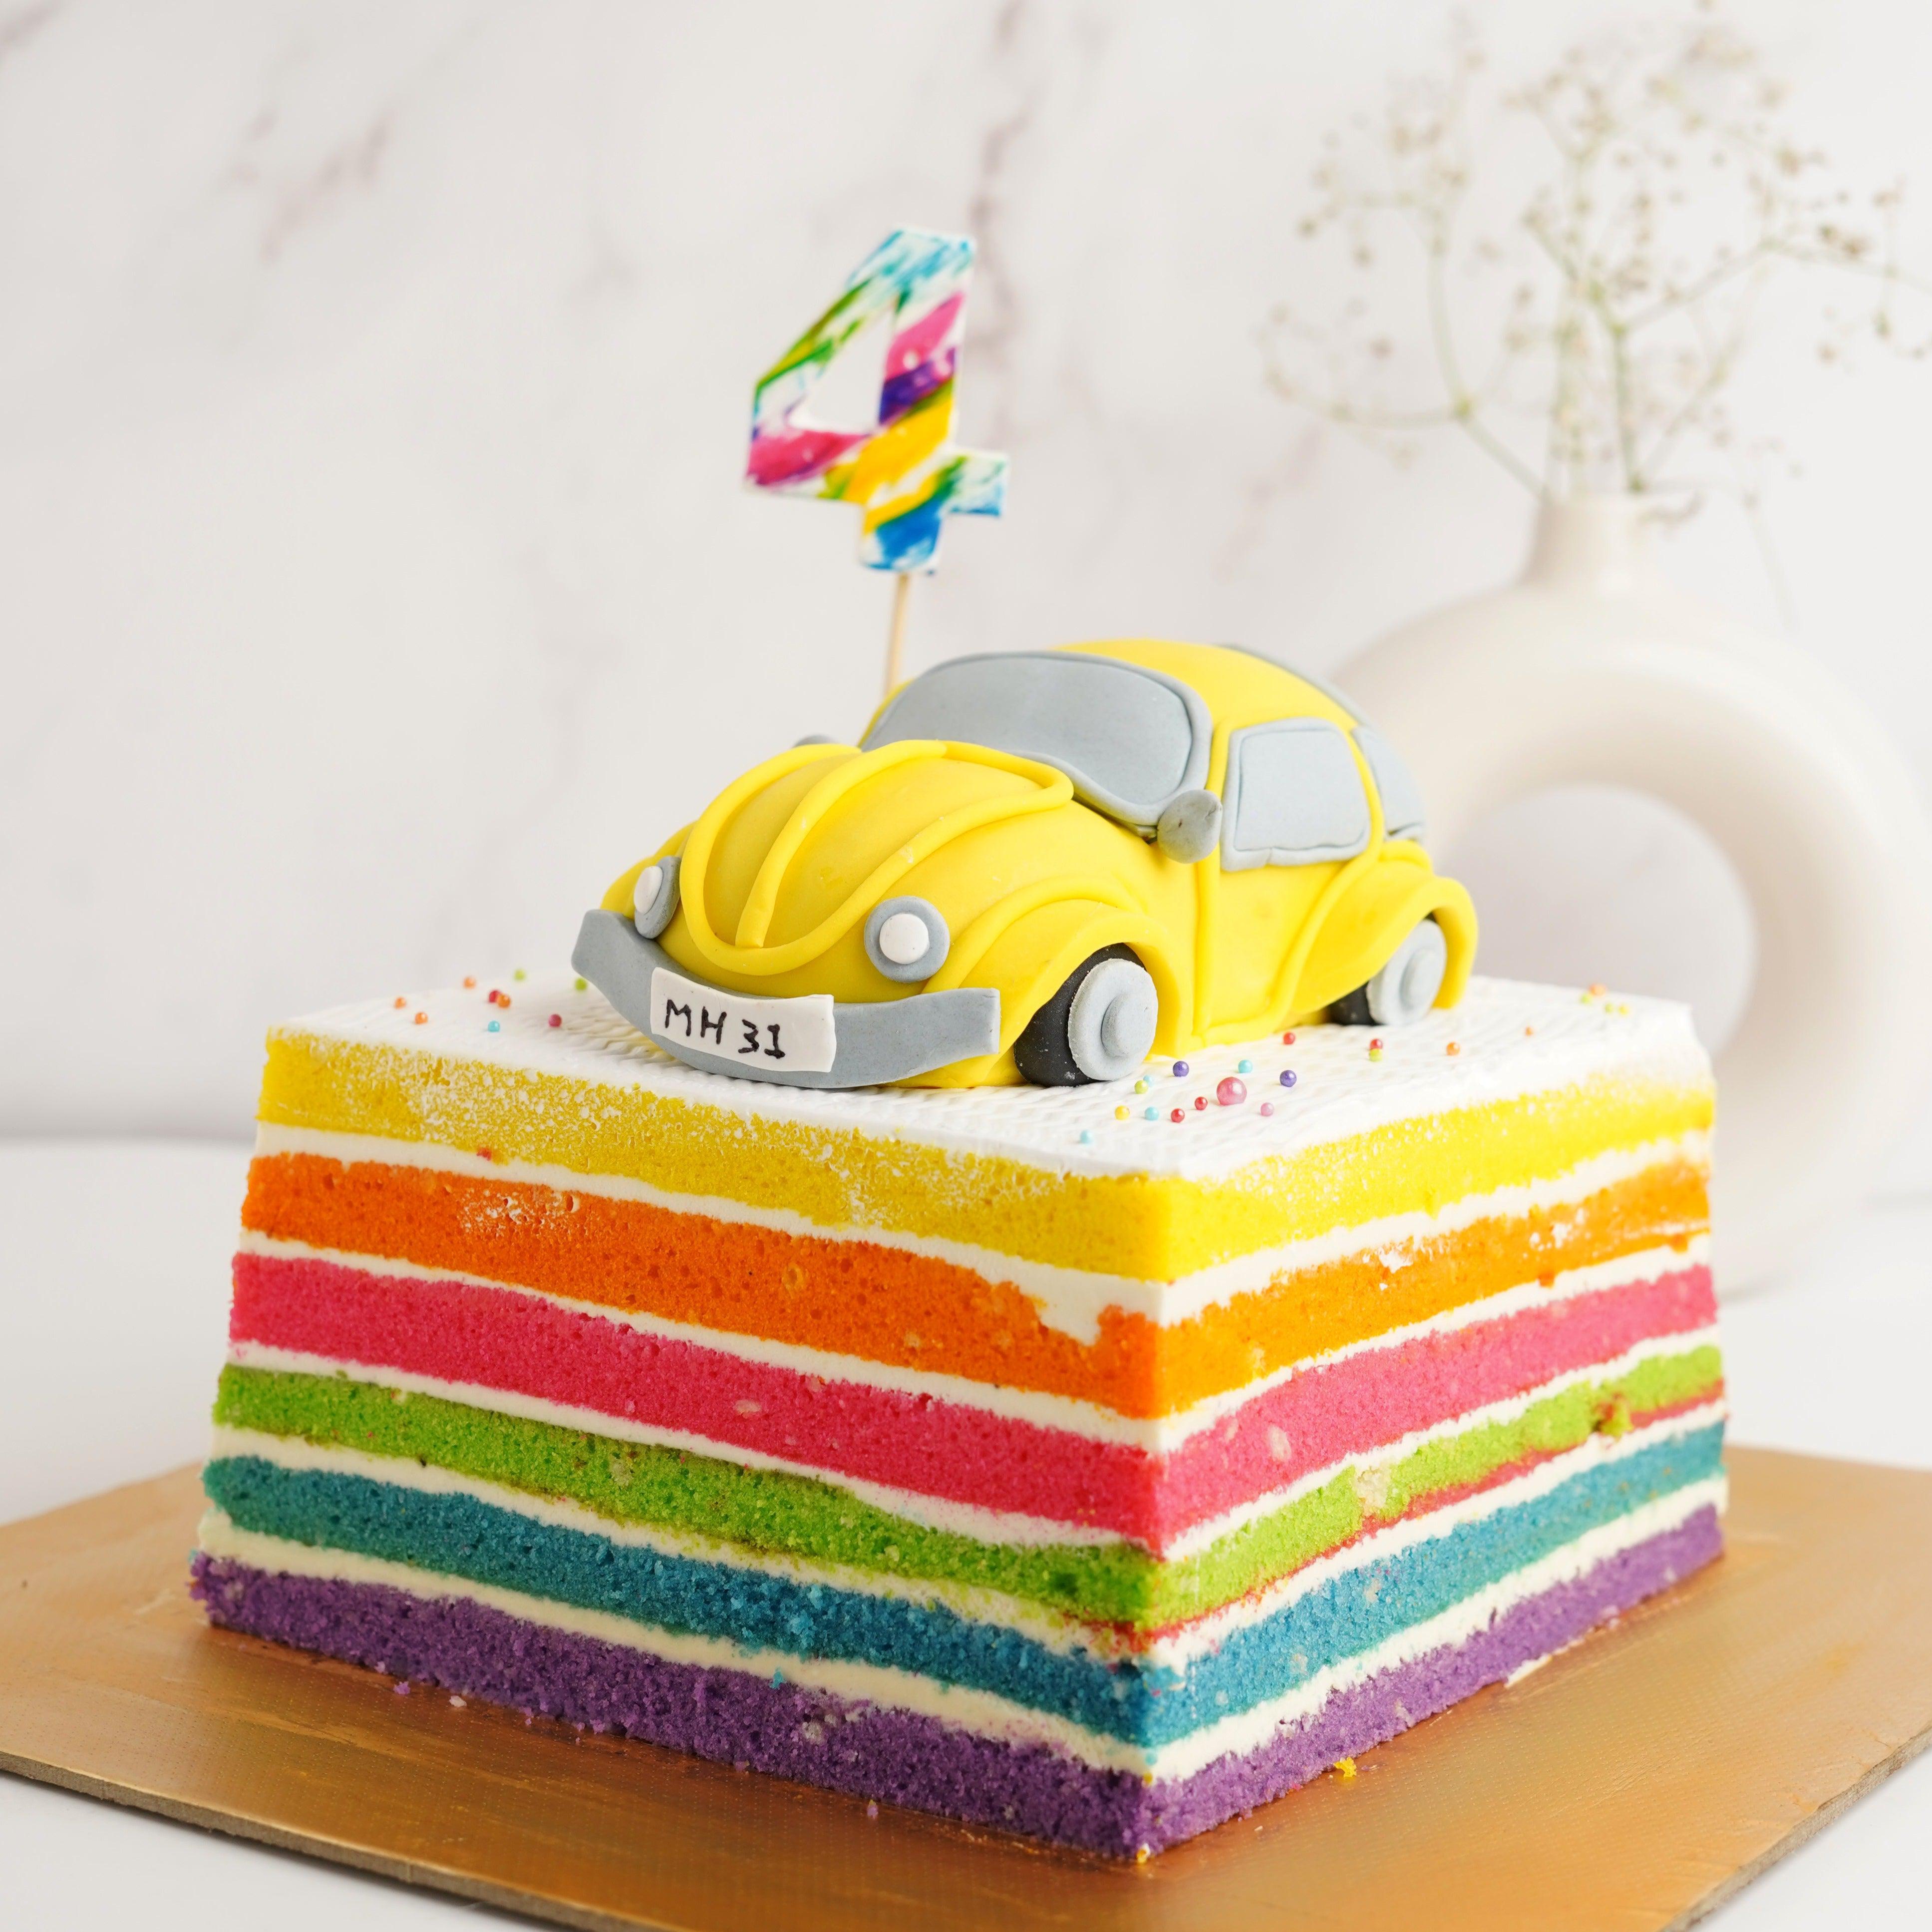 How to Make a Rainbow Surprise Layered Cake - XO, Katie Rosario